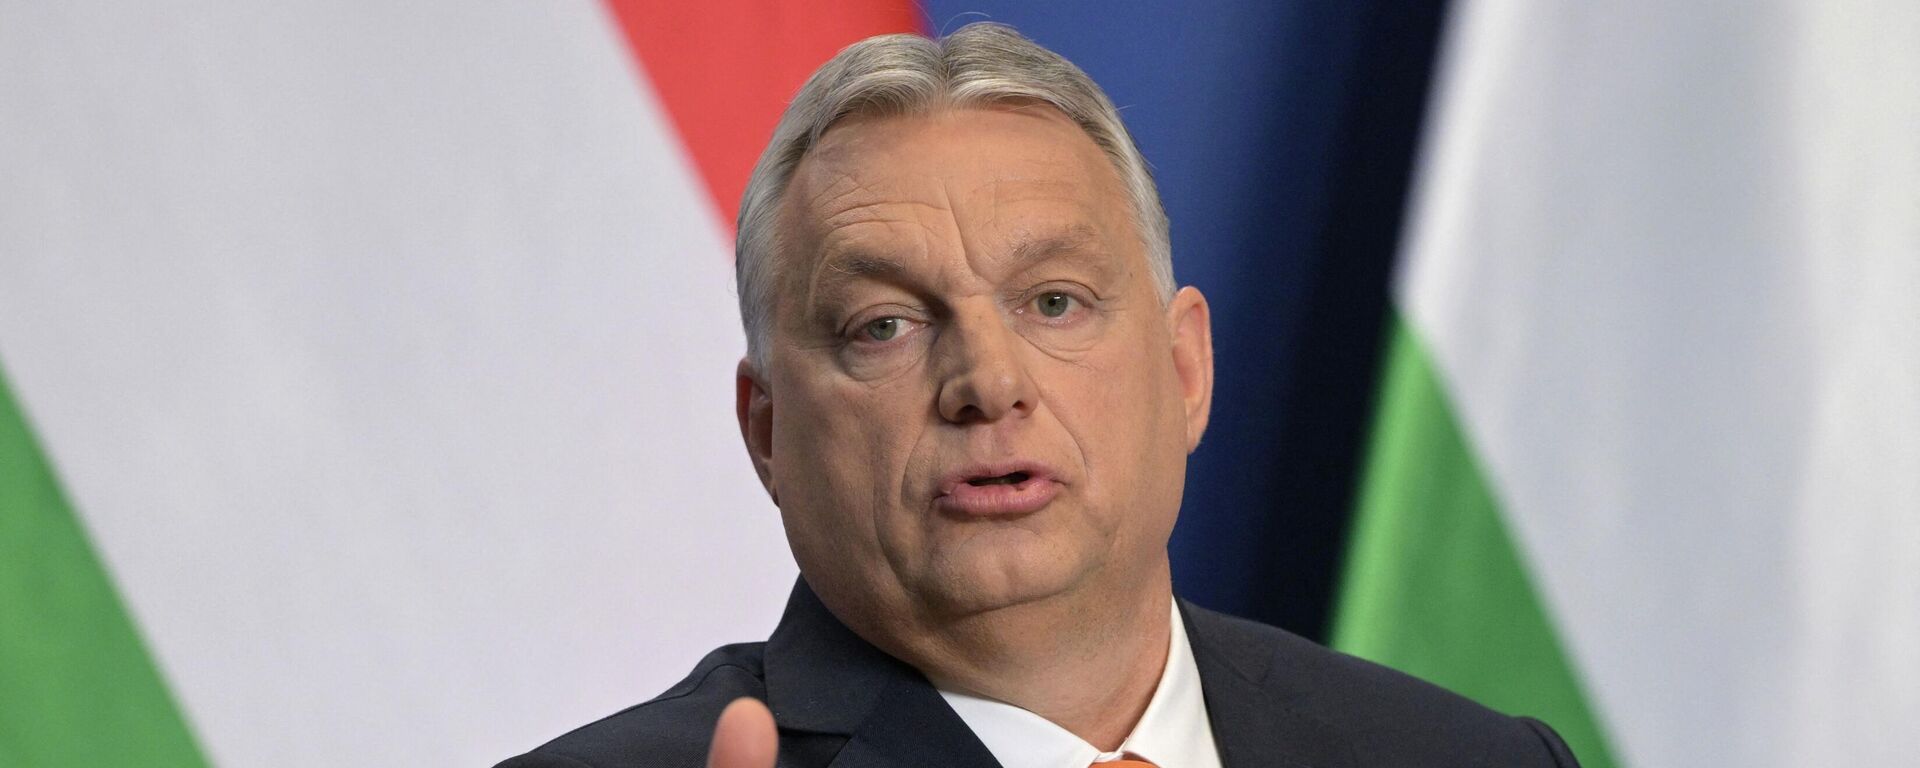 Viktor Orbán, el primer ministro de Hungría - Sputnik Mundo, 1920, 02.05.2022